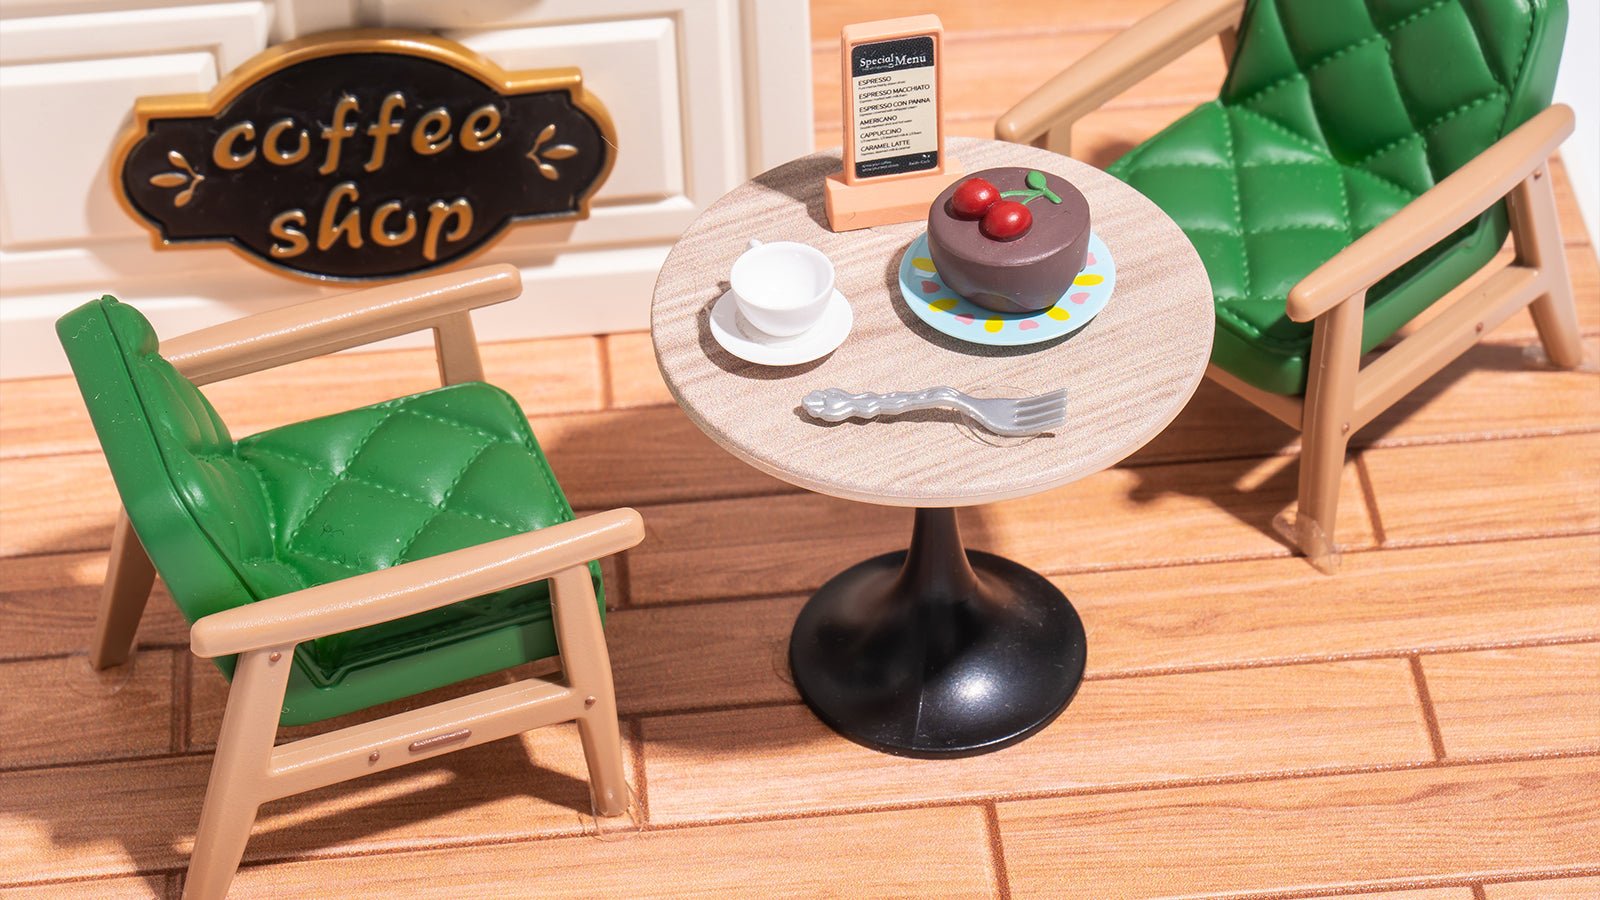 Golden Wheat Bakery Super Creator DIY Miniature Set - DIYative™